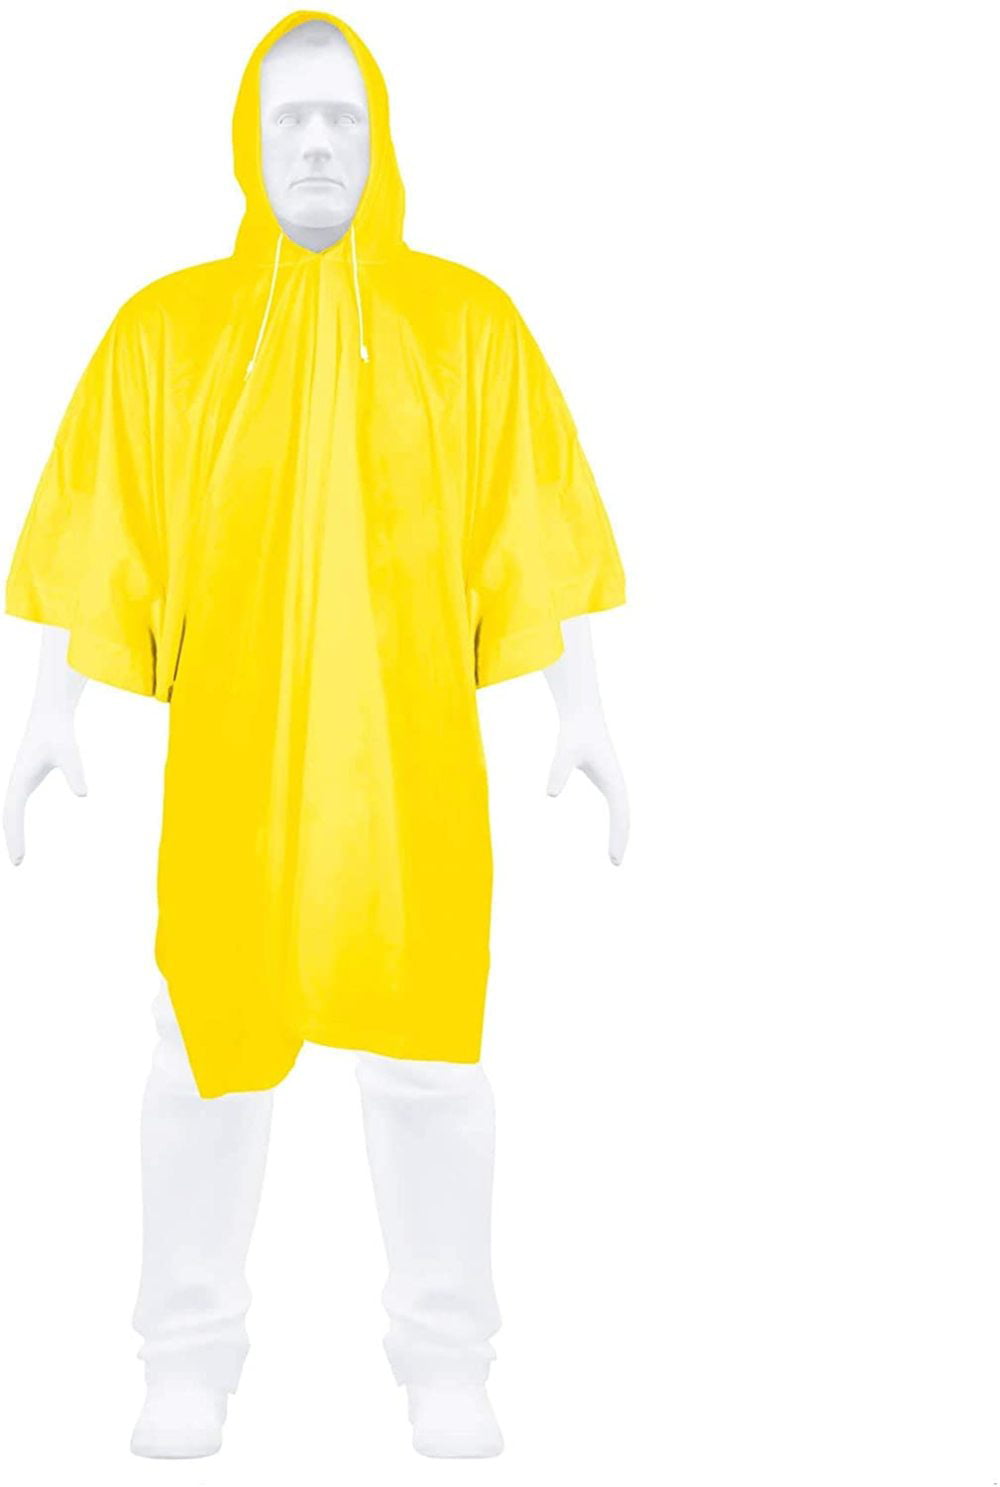 500 FESTIVAL RAIN PONCHO Disposable Pvc Raincoat Emergency Waterproof Camping UK 